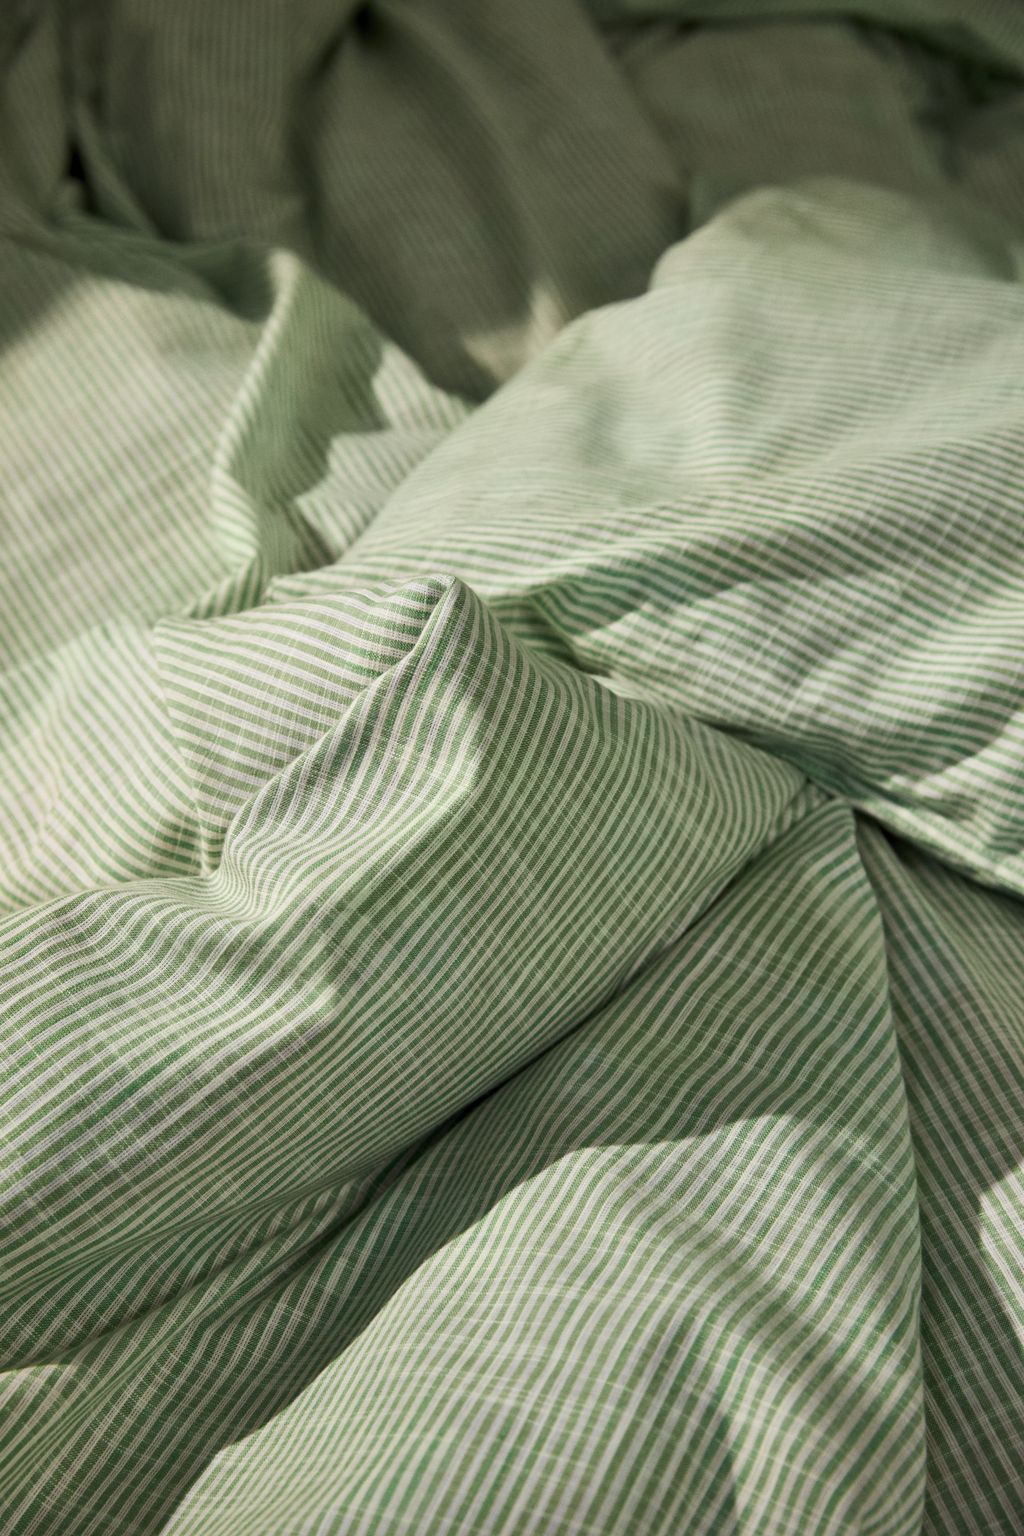 JUNA Monokrome linjer Seng linned 140 x200 cm, grøn/hvid